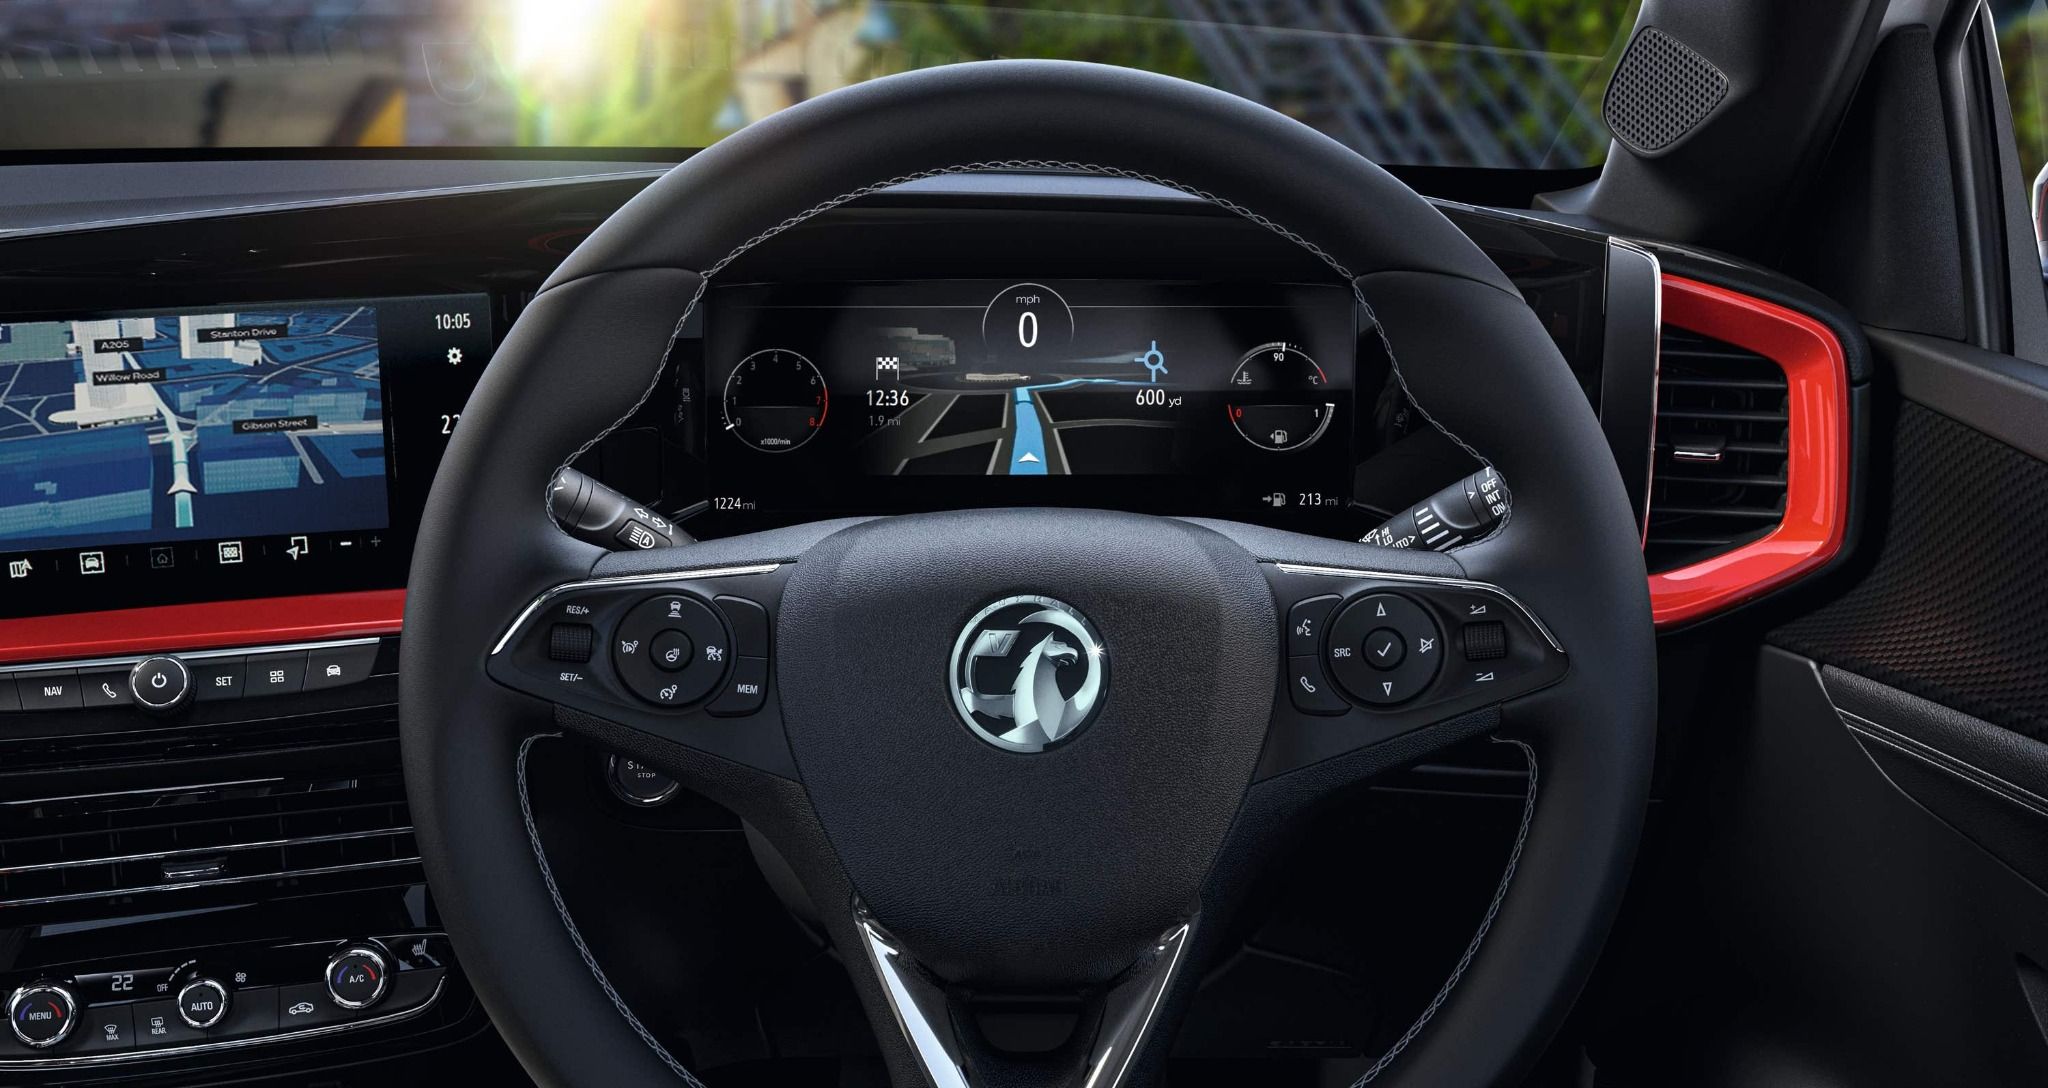 Vauxhall Mokka steering wheel